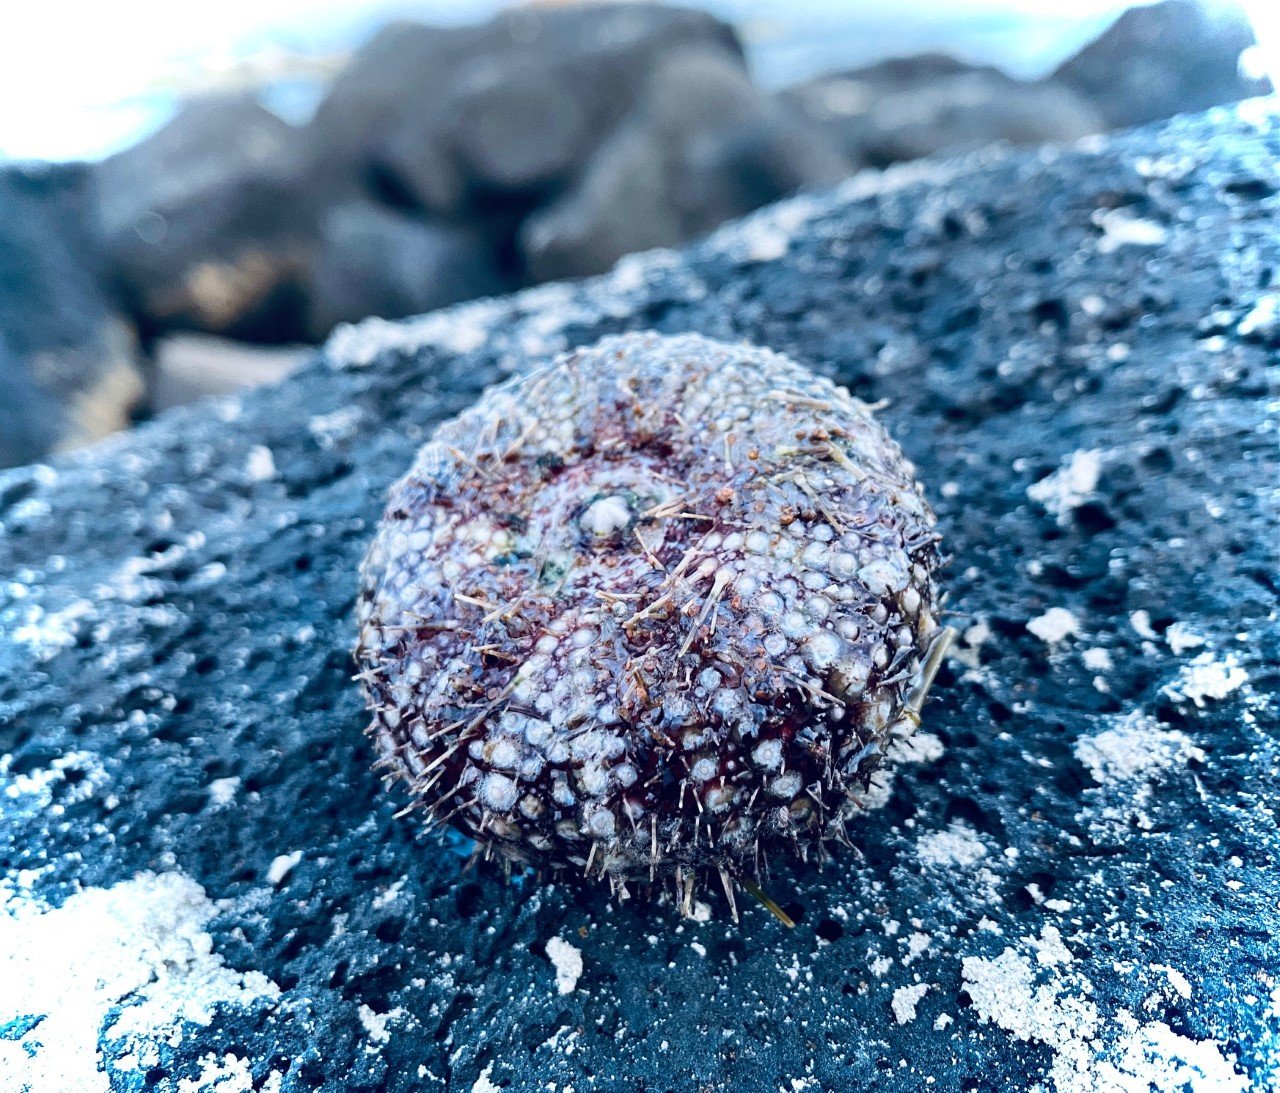 Sea Urchin on a rock